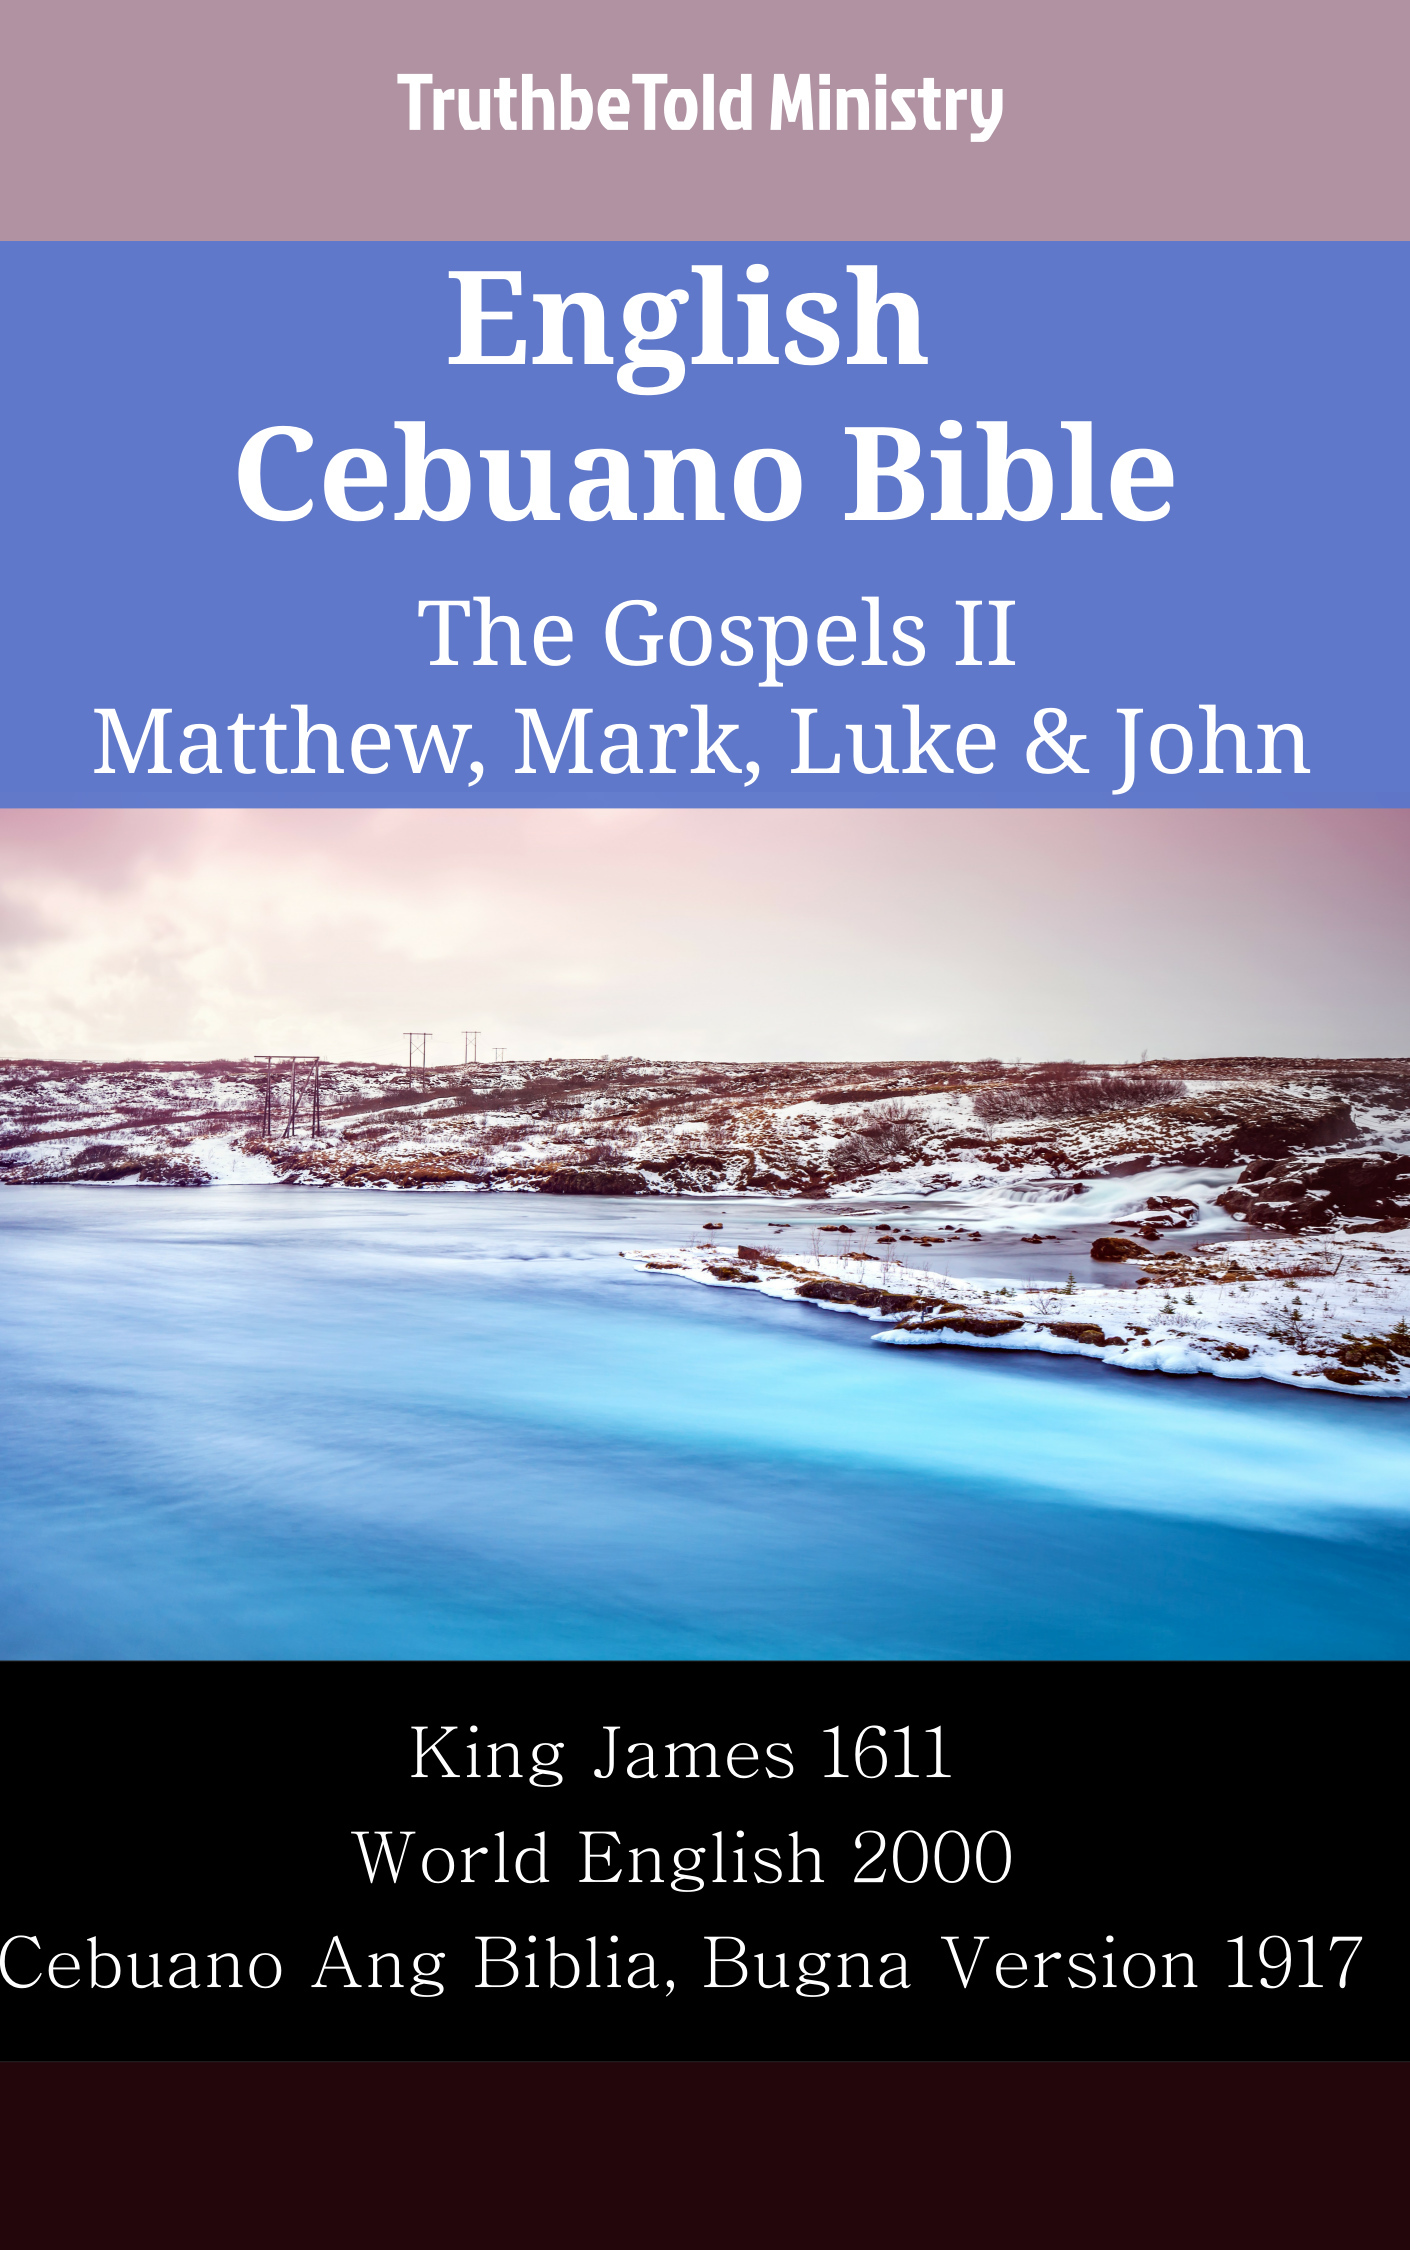 English Cebuano Bible - The Gospels II - Matthew, Mark, Luke & John